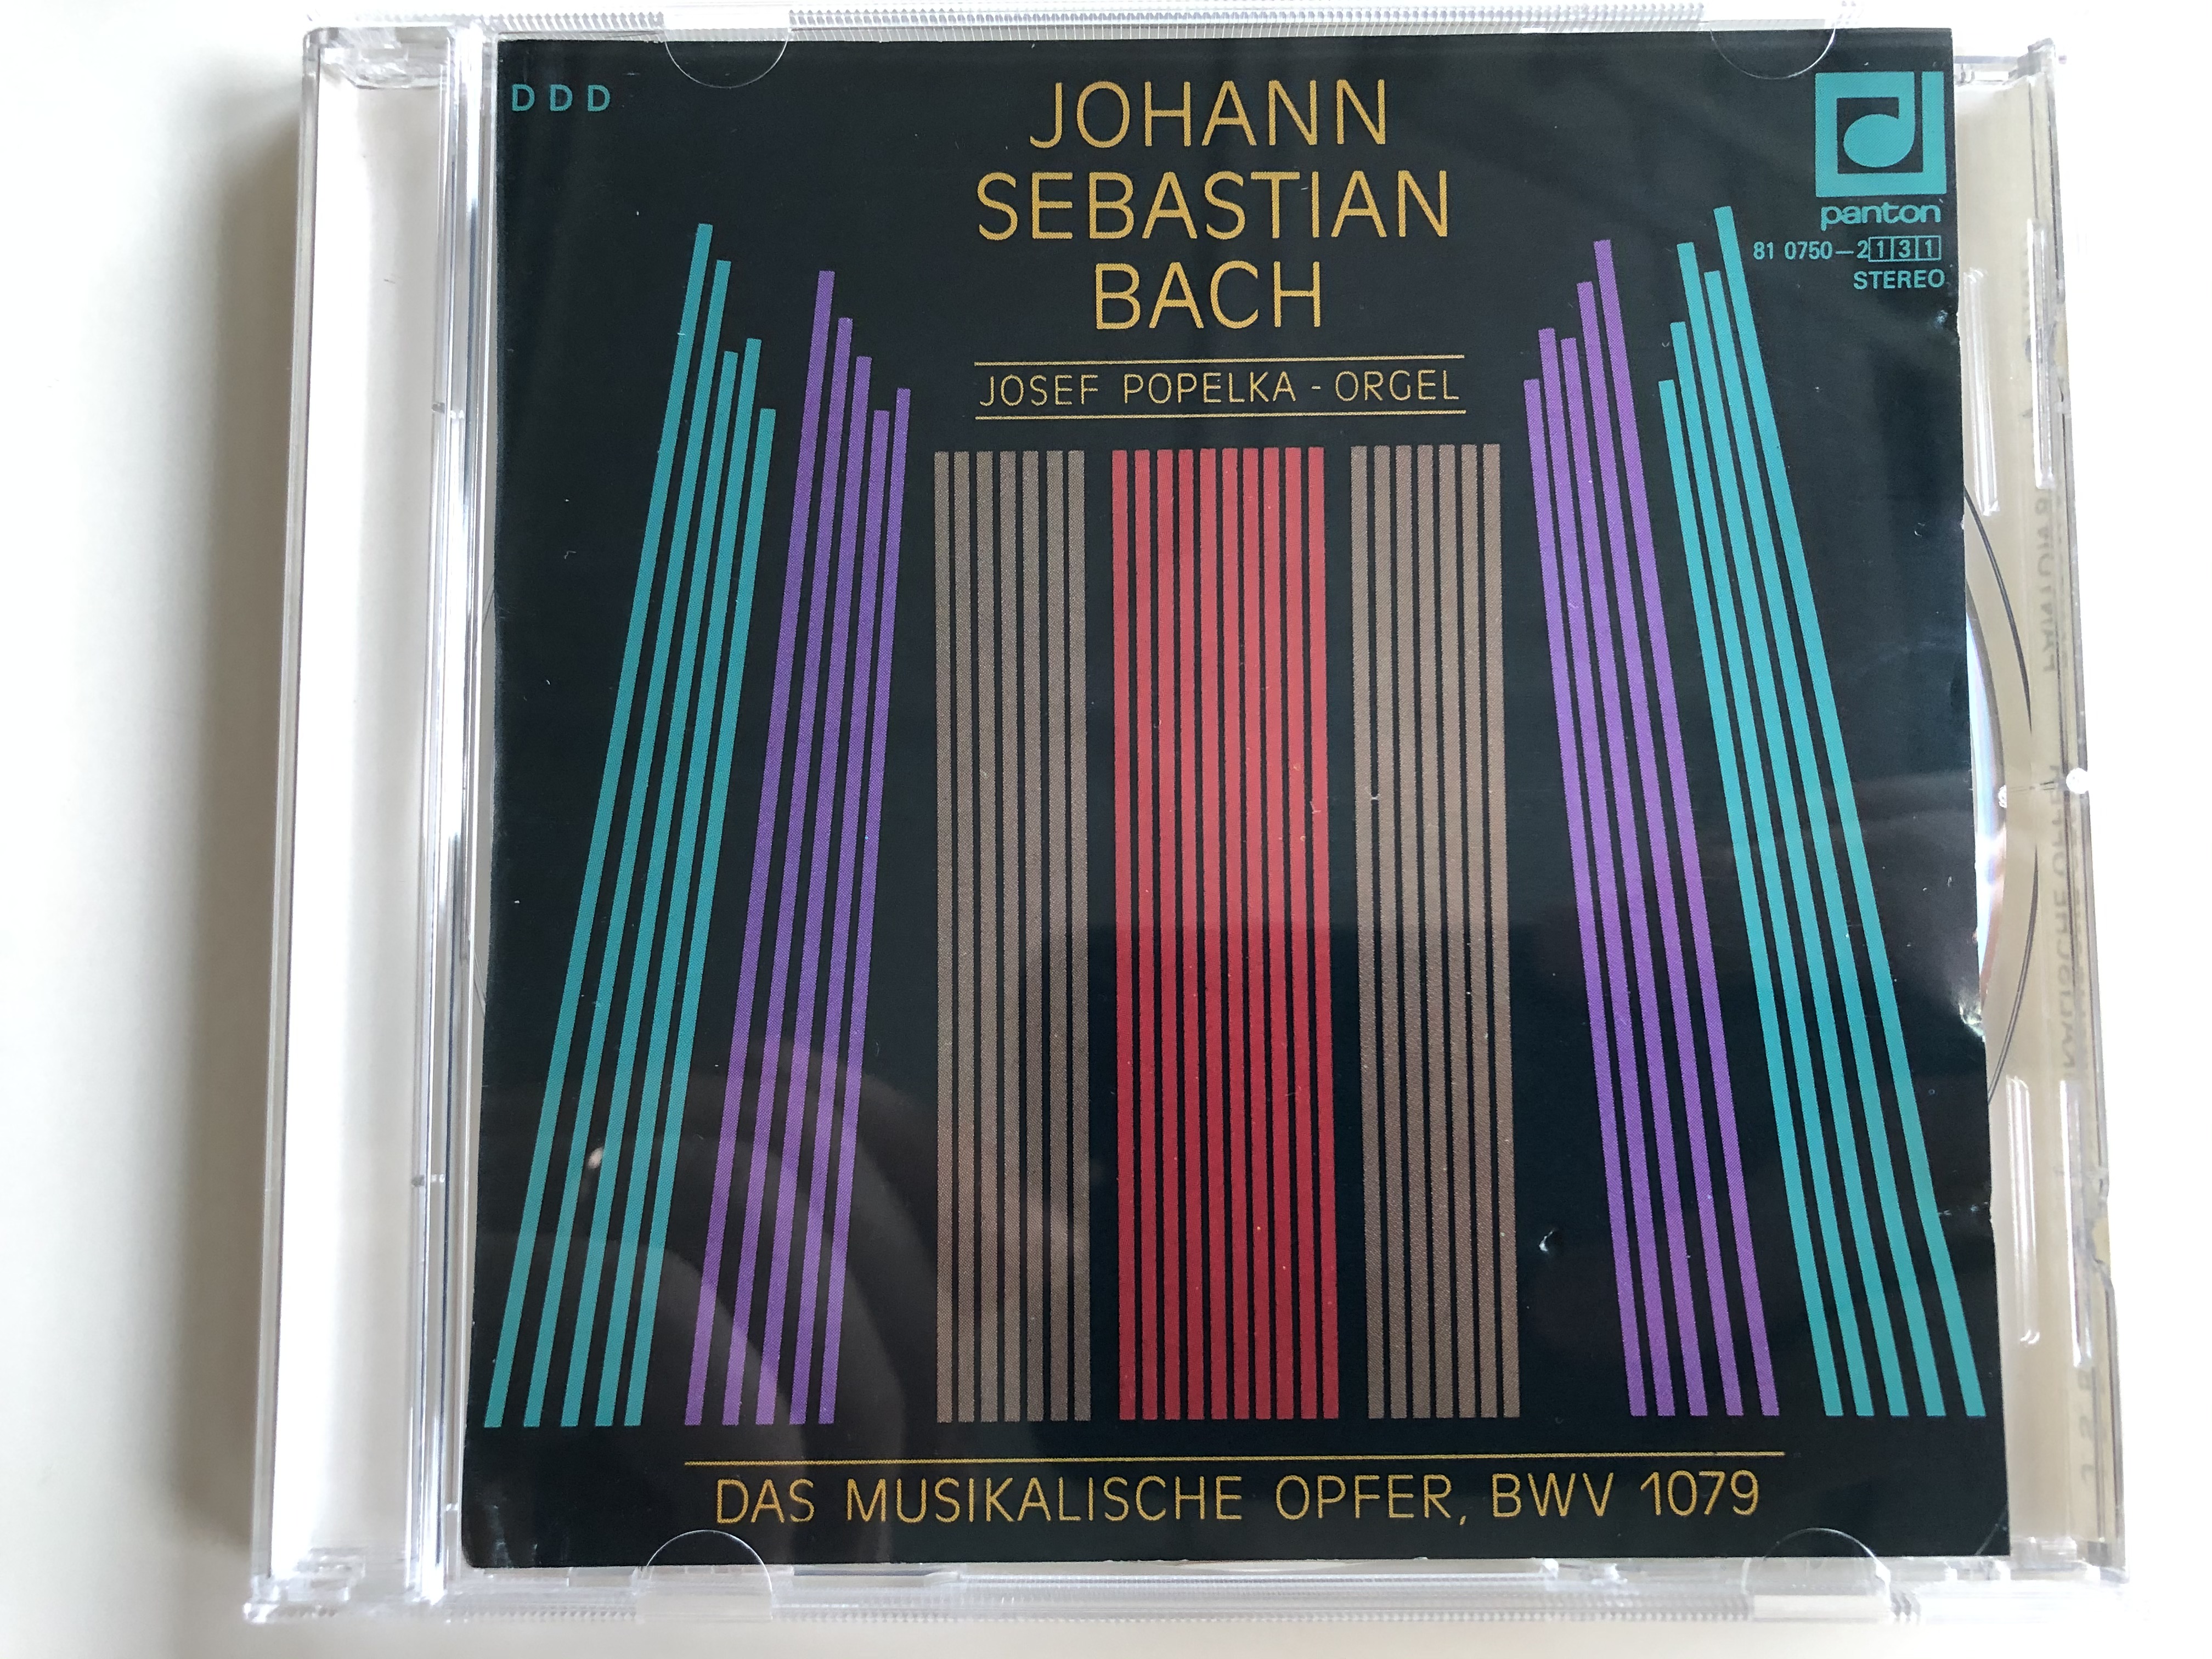 johann-sebastian-bach-josef-popelka-orgel-das-musikalische-opfer-bwv-1079-panton-audio-cd-1988-stereo-81-0750-2131-1-.jpg